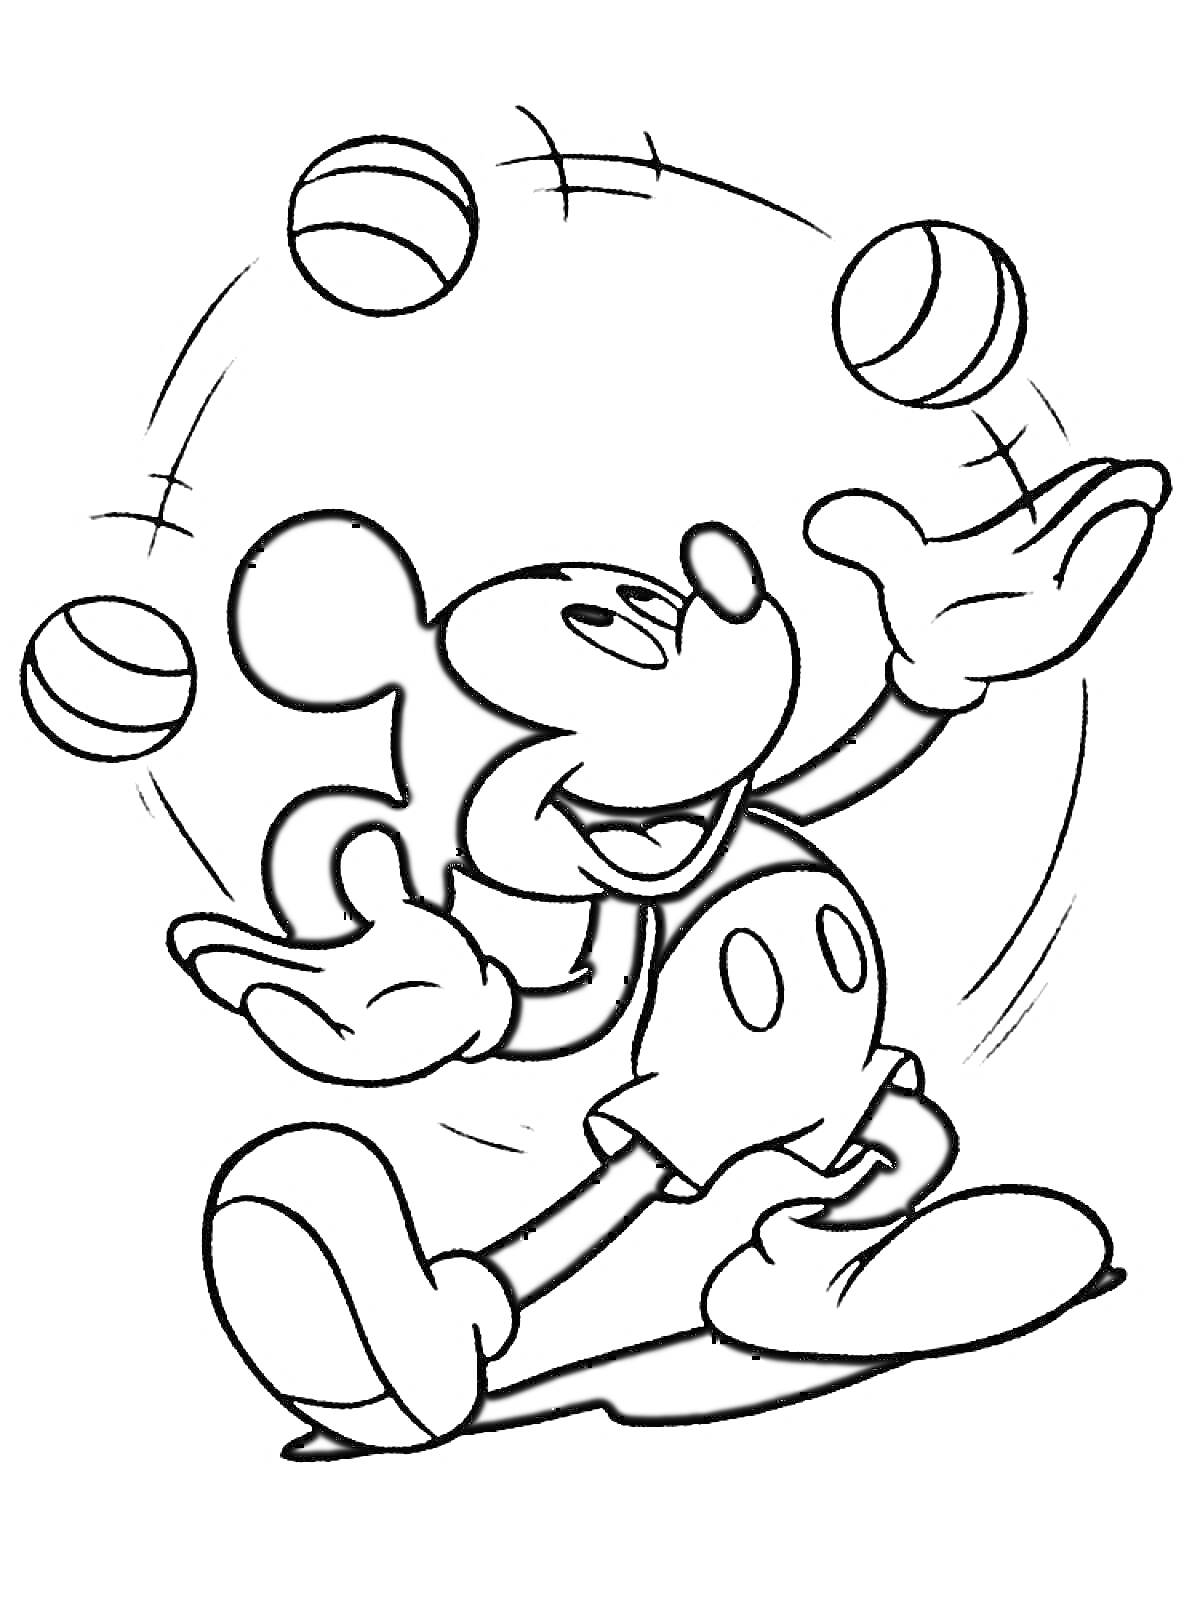 Микки Маус жонглирует тремя мячами